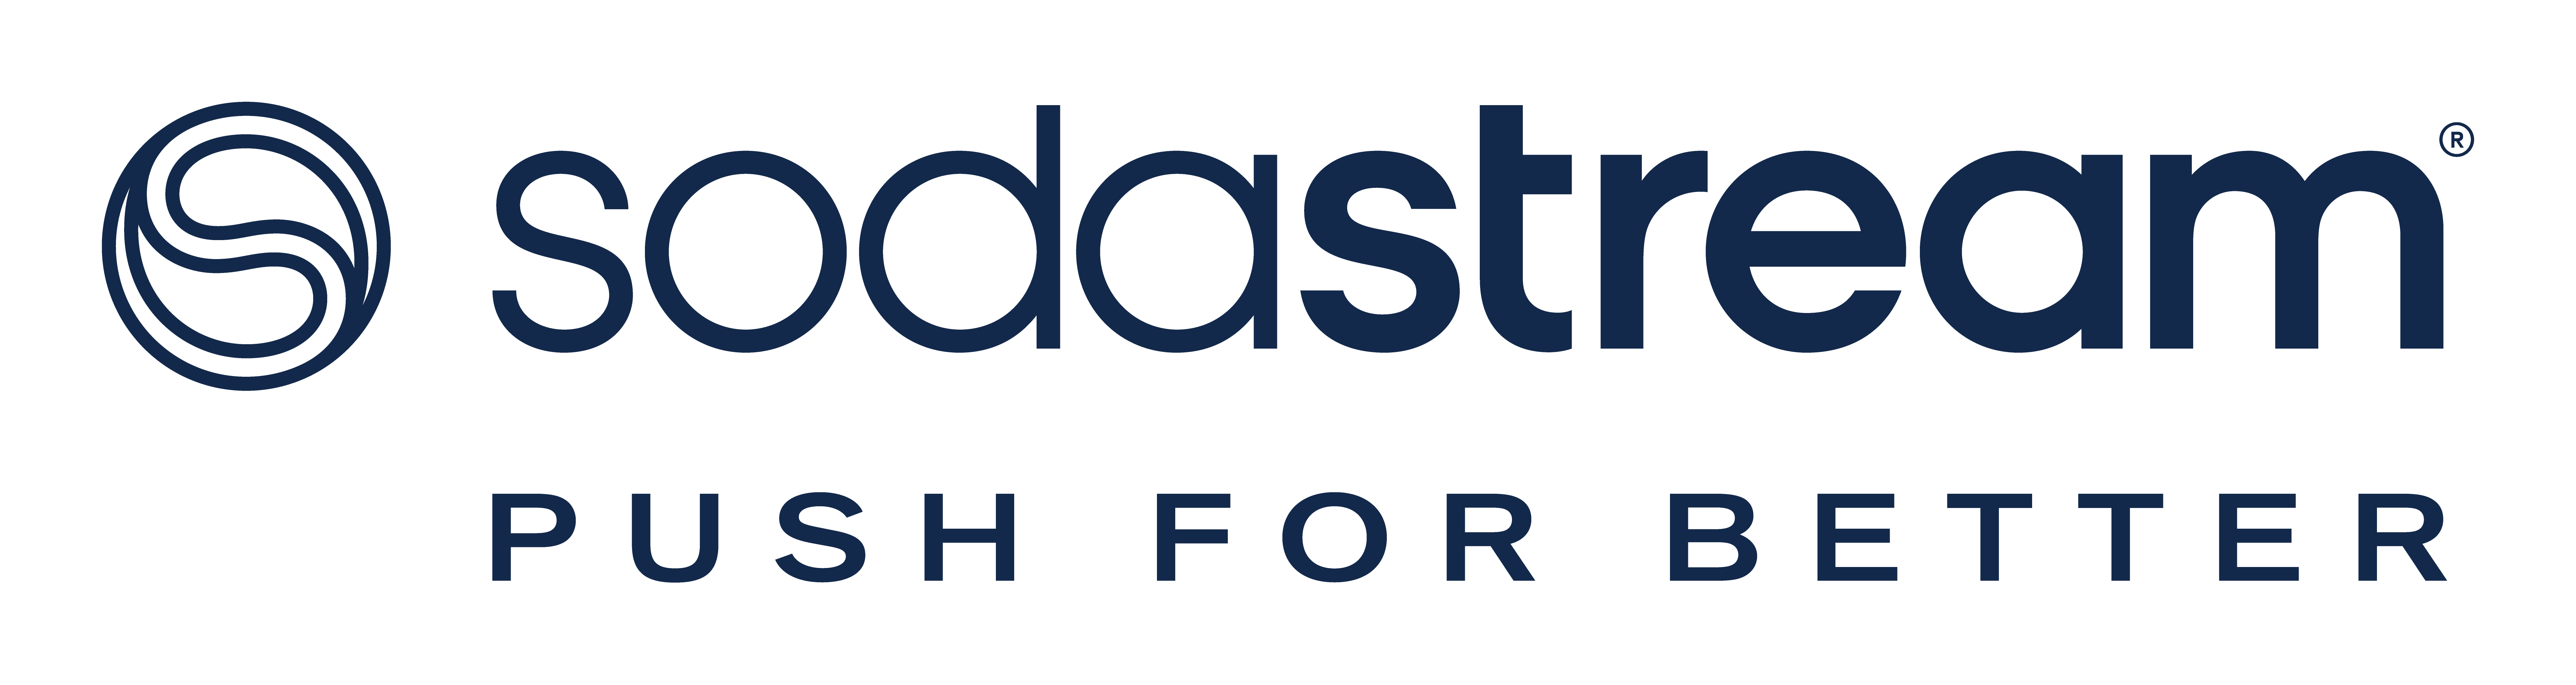 Sodastream logo